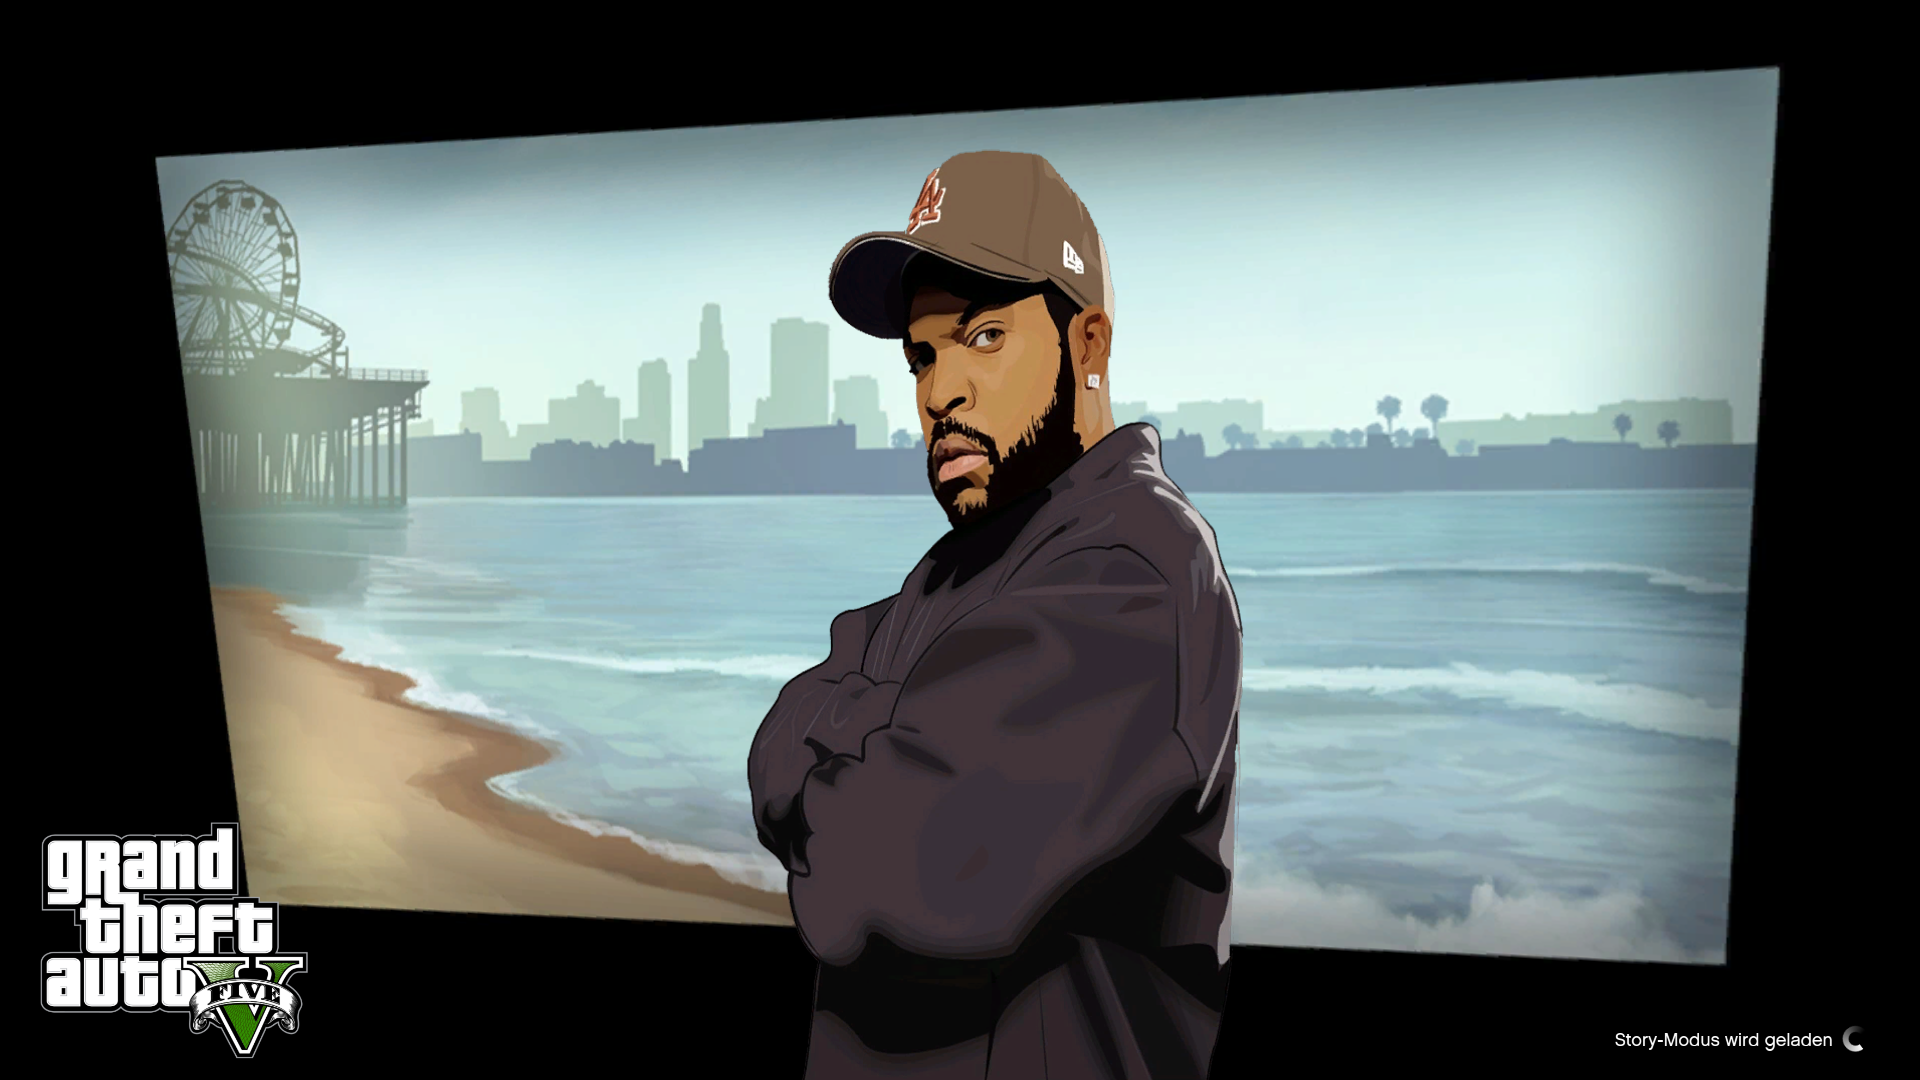 Gta loading theme. Ice Cube GTA San Andreas. Ice Cube GTA 5. Ice Cube в ГТА. Ice Cube Songs GTA 5.